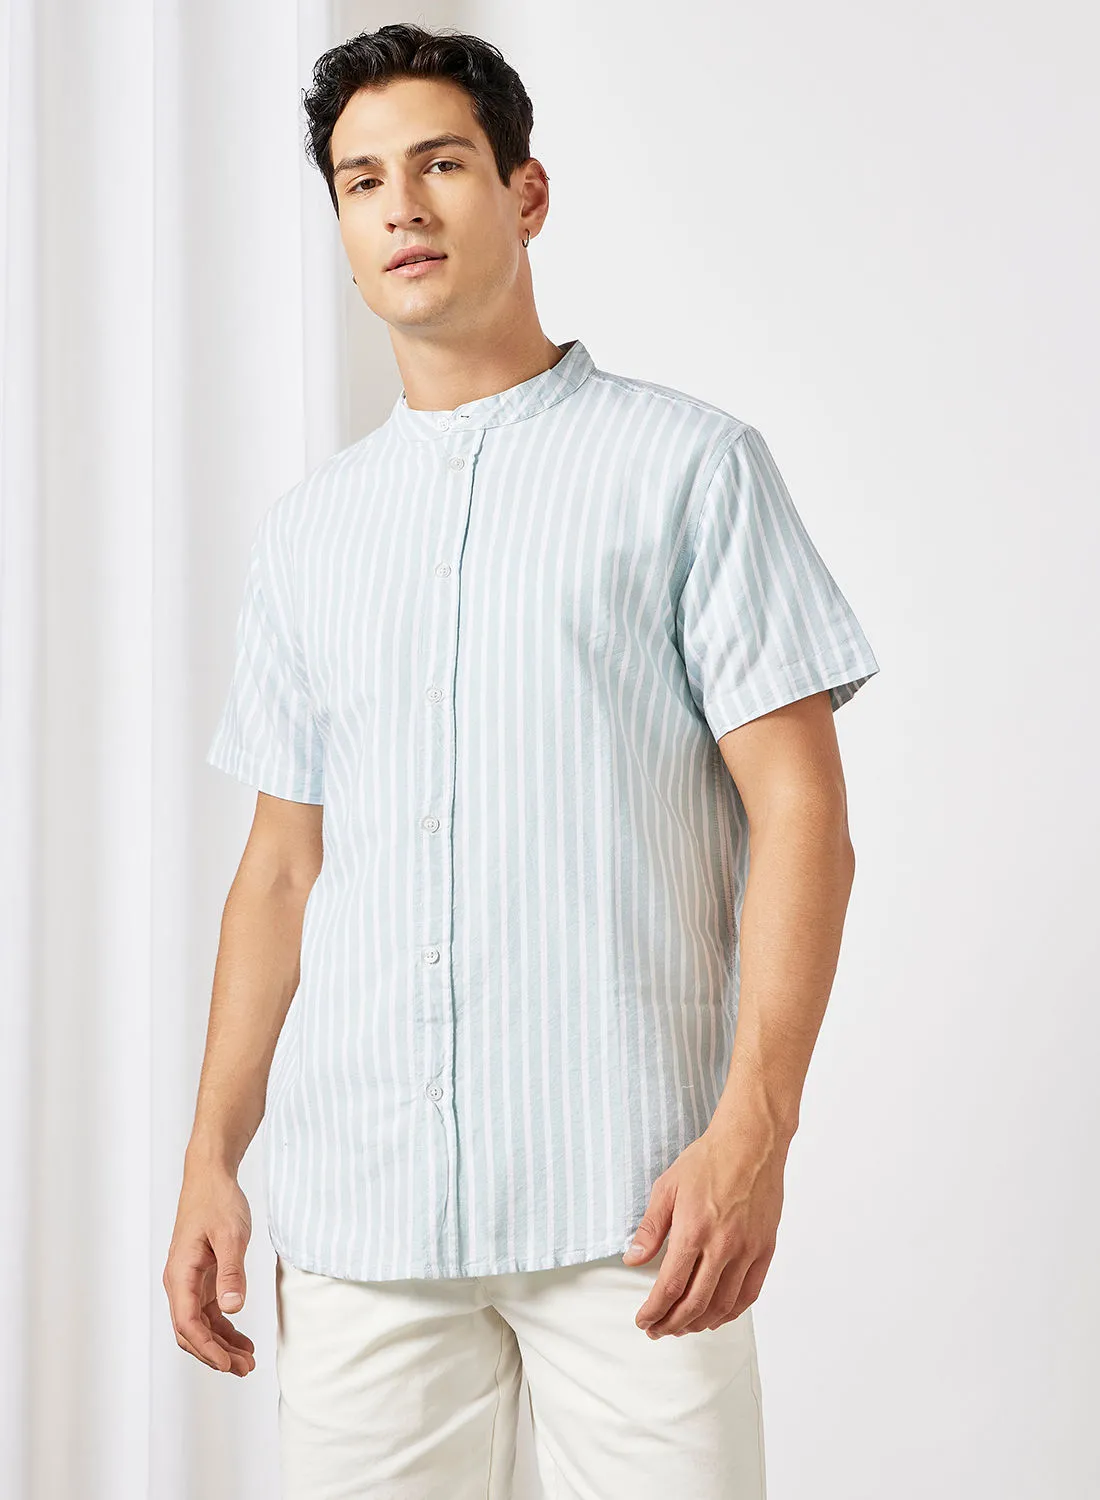 STATE 8 Mandarin Collar Striped Shirt Blue/White